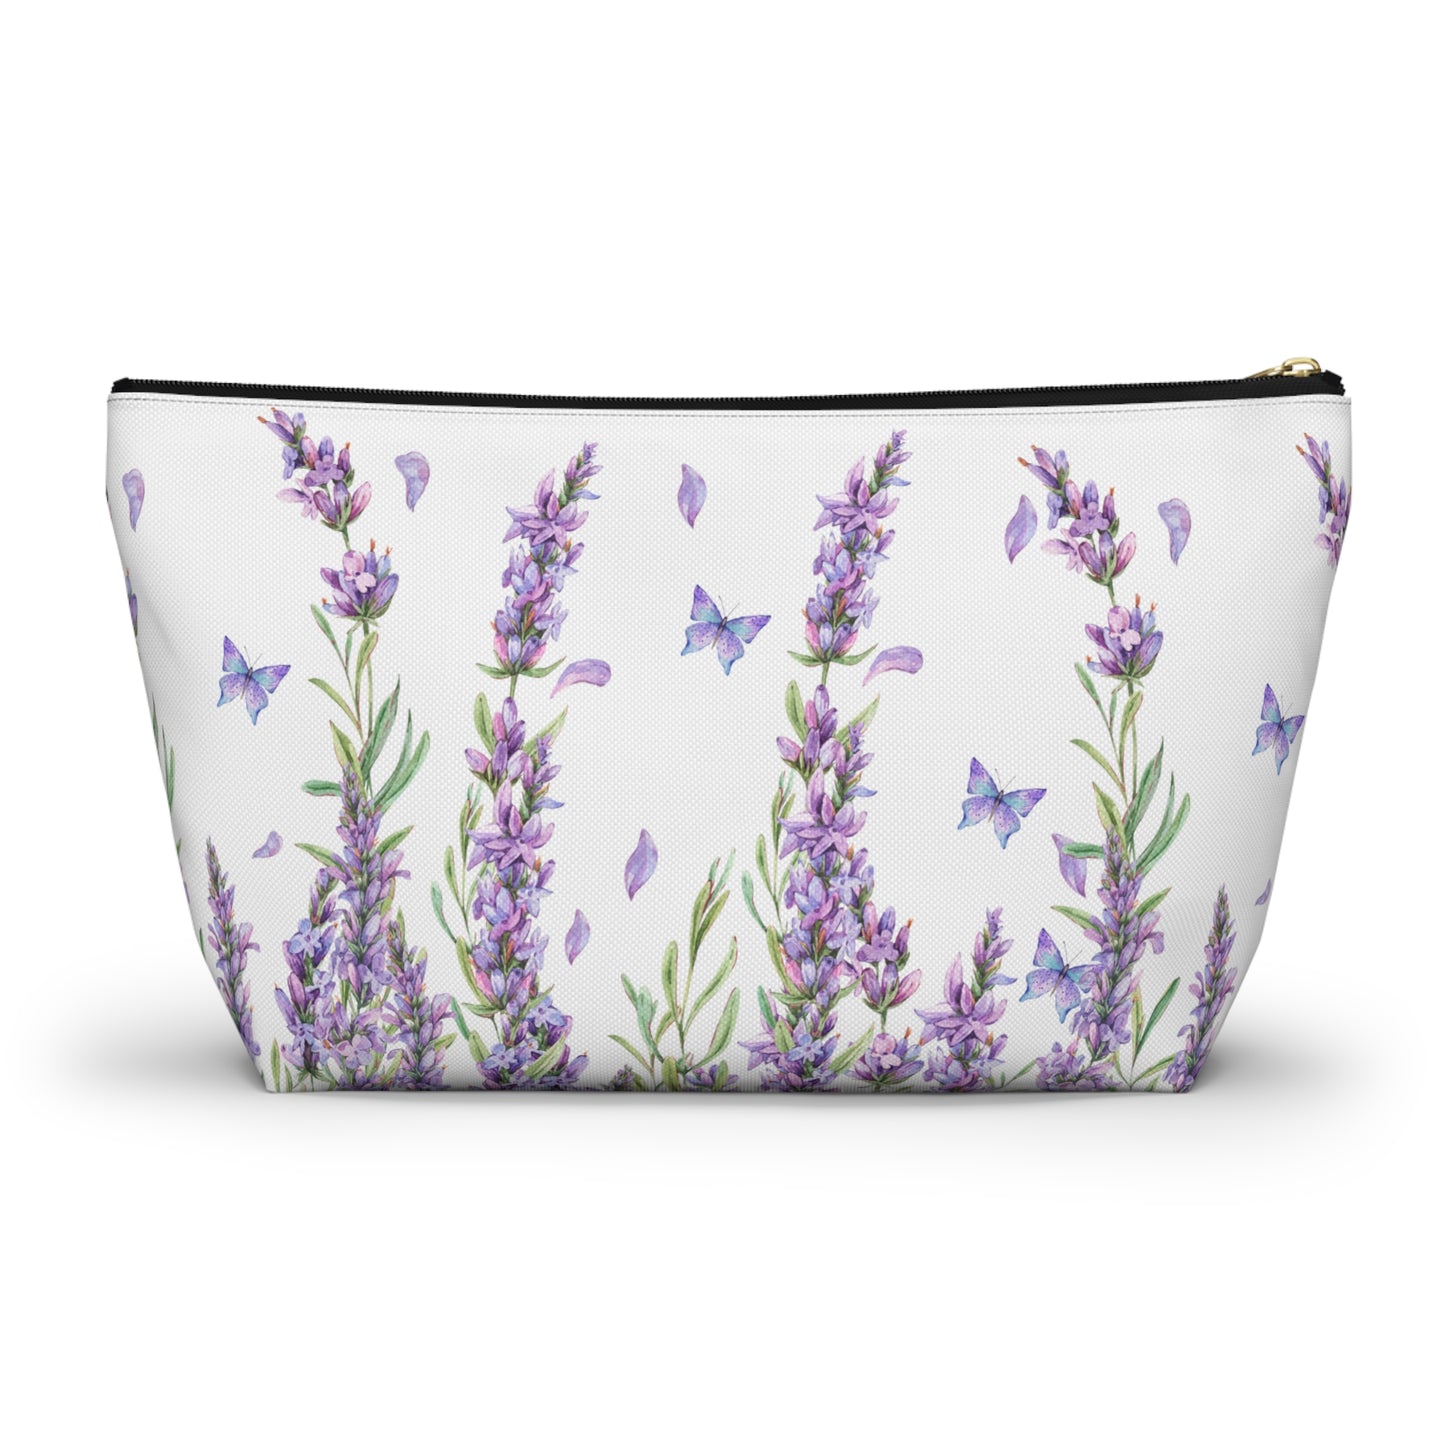 Personalized Makeup Bag / Purple Lavender Cosmetic Bag